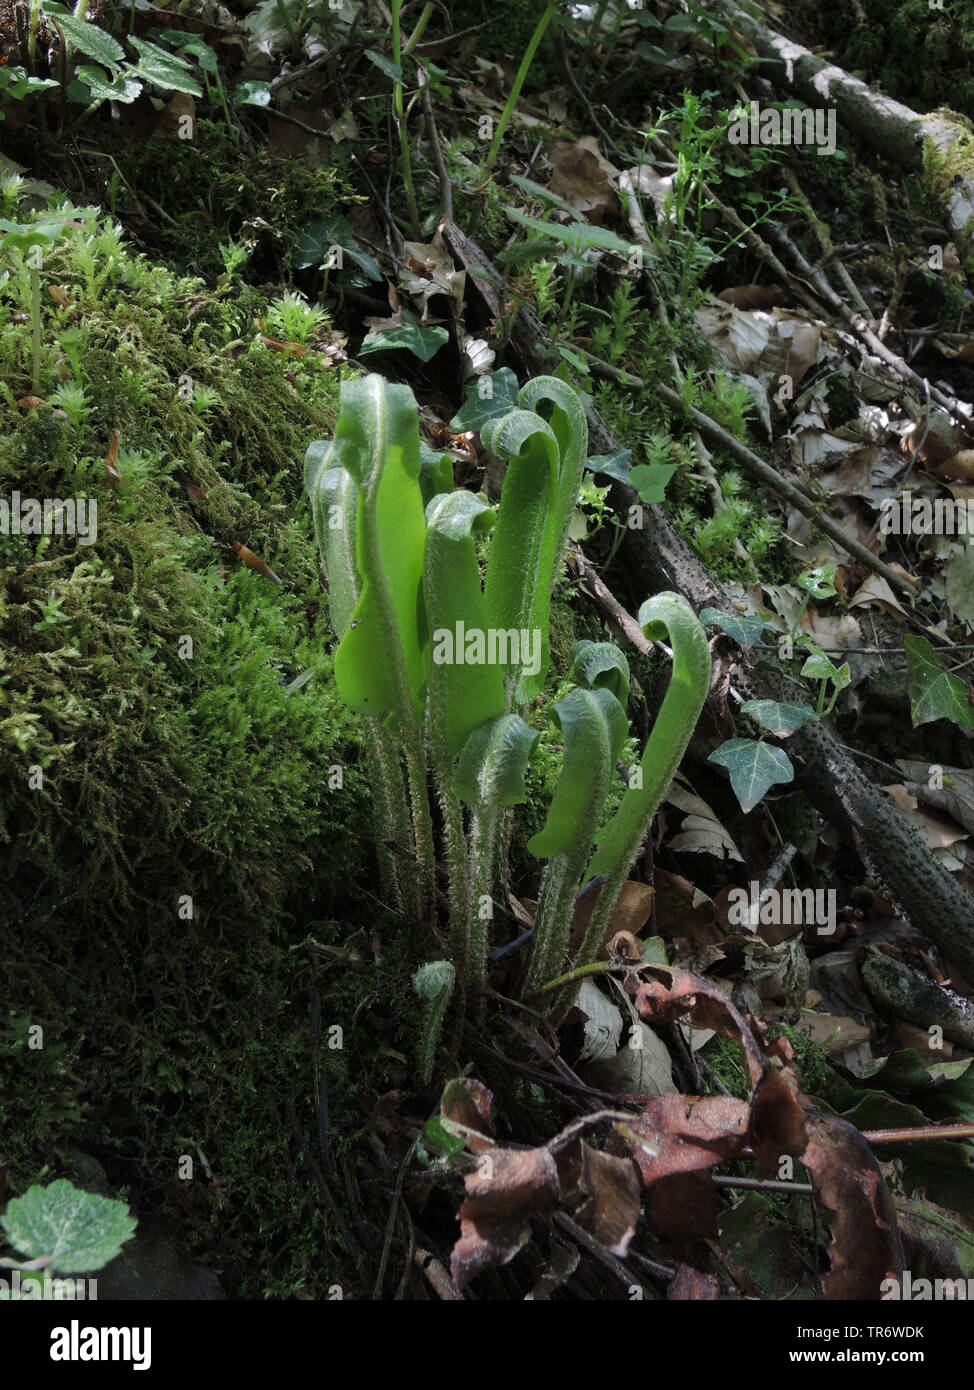 hart's tongue, European harts-tongue fern (Asplenium scolopendrium, Phyllitis scolopendrium), with young fronds, Germany, North Rhine-Westphalia Stock Photo